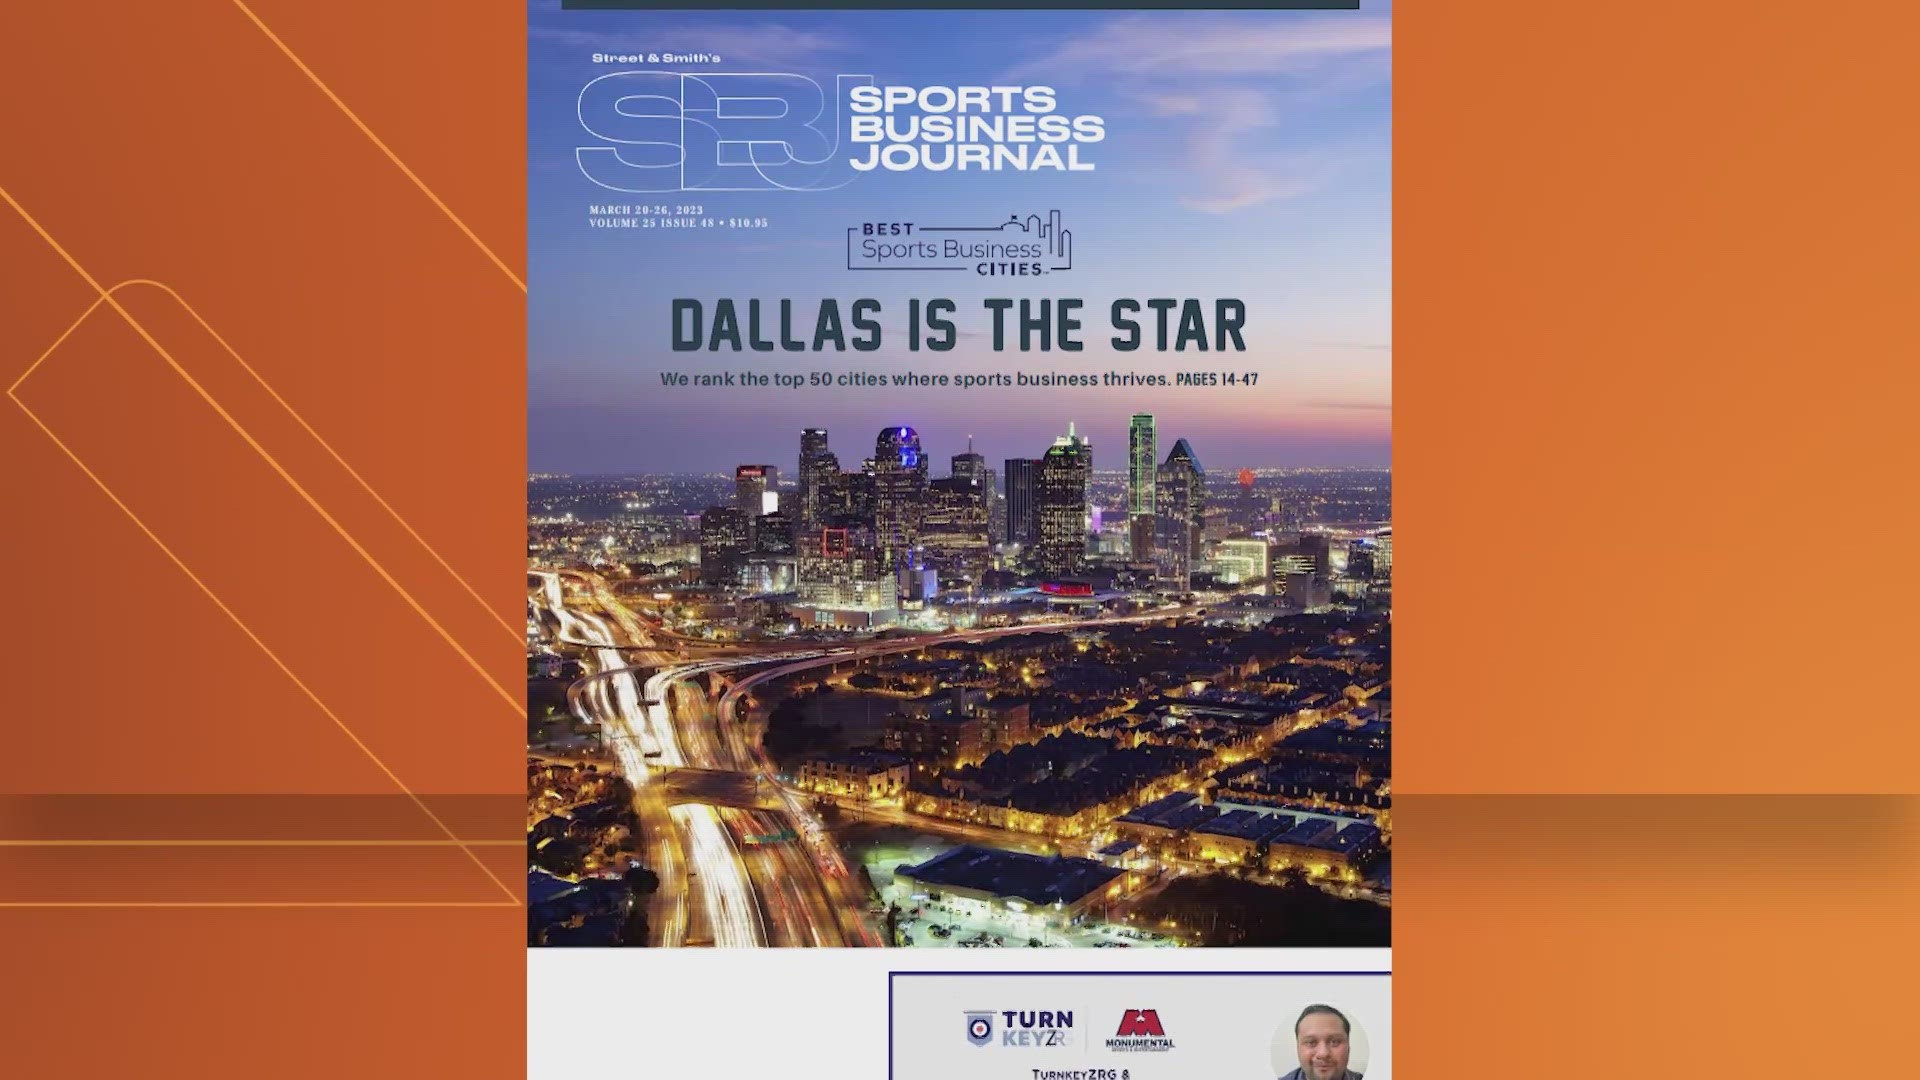 WFAA reporter Chris Sadeghi breaks down the metrics behind Sports Business Journal's rankings.